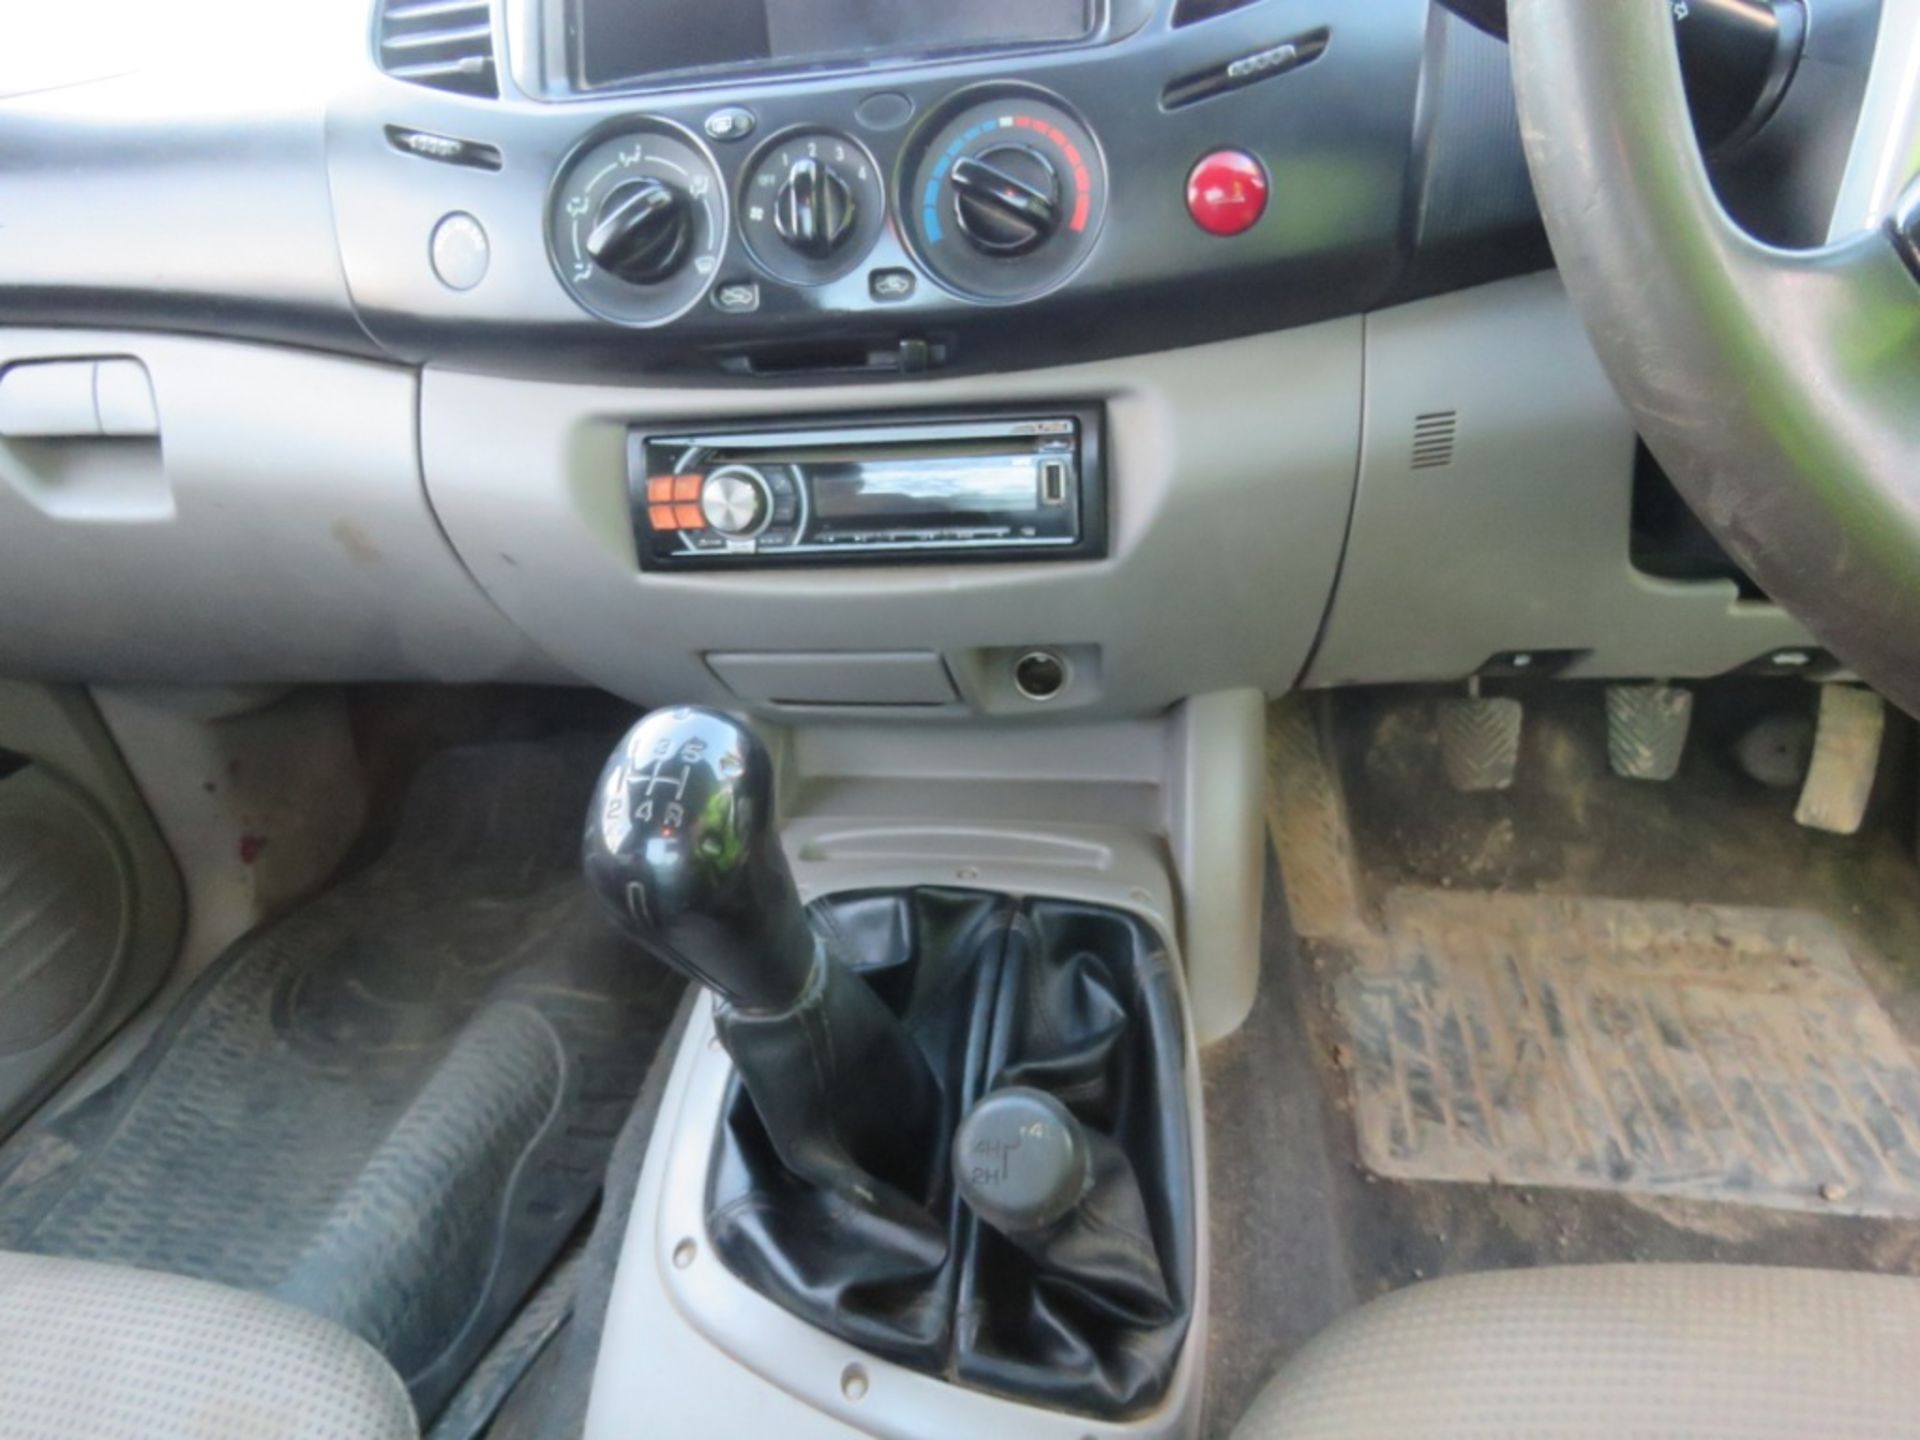 MITSUBISHI L200 4WORK DI 4WD SINGLE CABBED PICKUP TRUCK REG:DN59 CHG. WITH V5. MOT UNTIL 14/08/24. 1 - Image 10 of 13